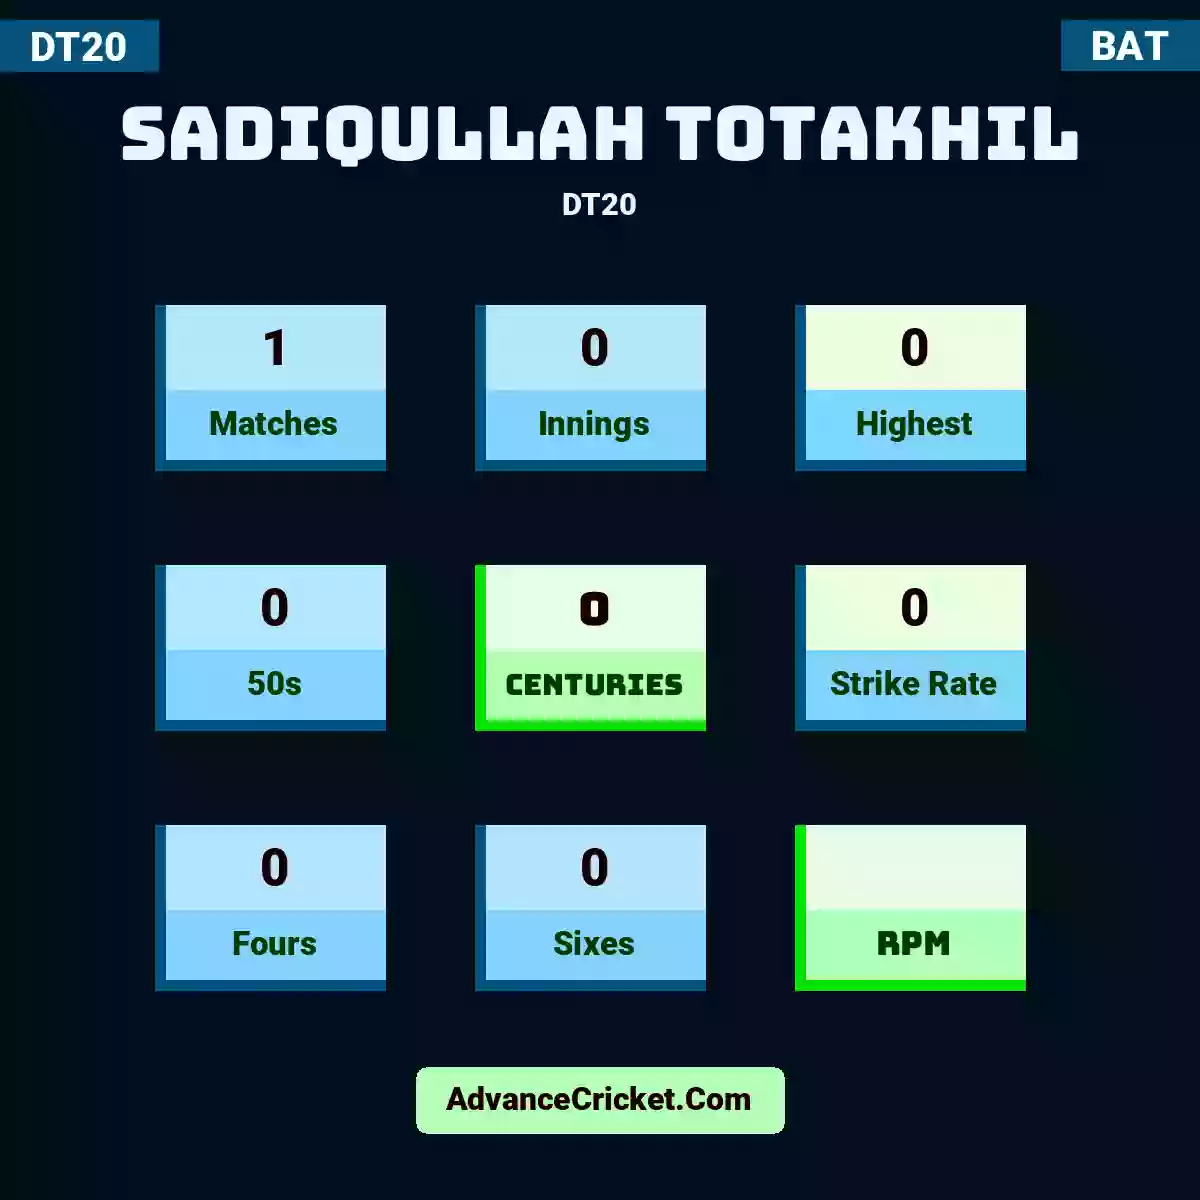 Sadiqullah Totakhil DT20 , Sadiqullah Totakhil played 1 matches, scored 0 runs as highest, 0 half-centuries, and 0 centuries, with a strike rate of 0. S.Totakhil hit 0 fours and 0 sixes.